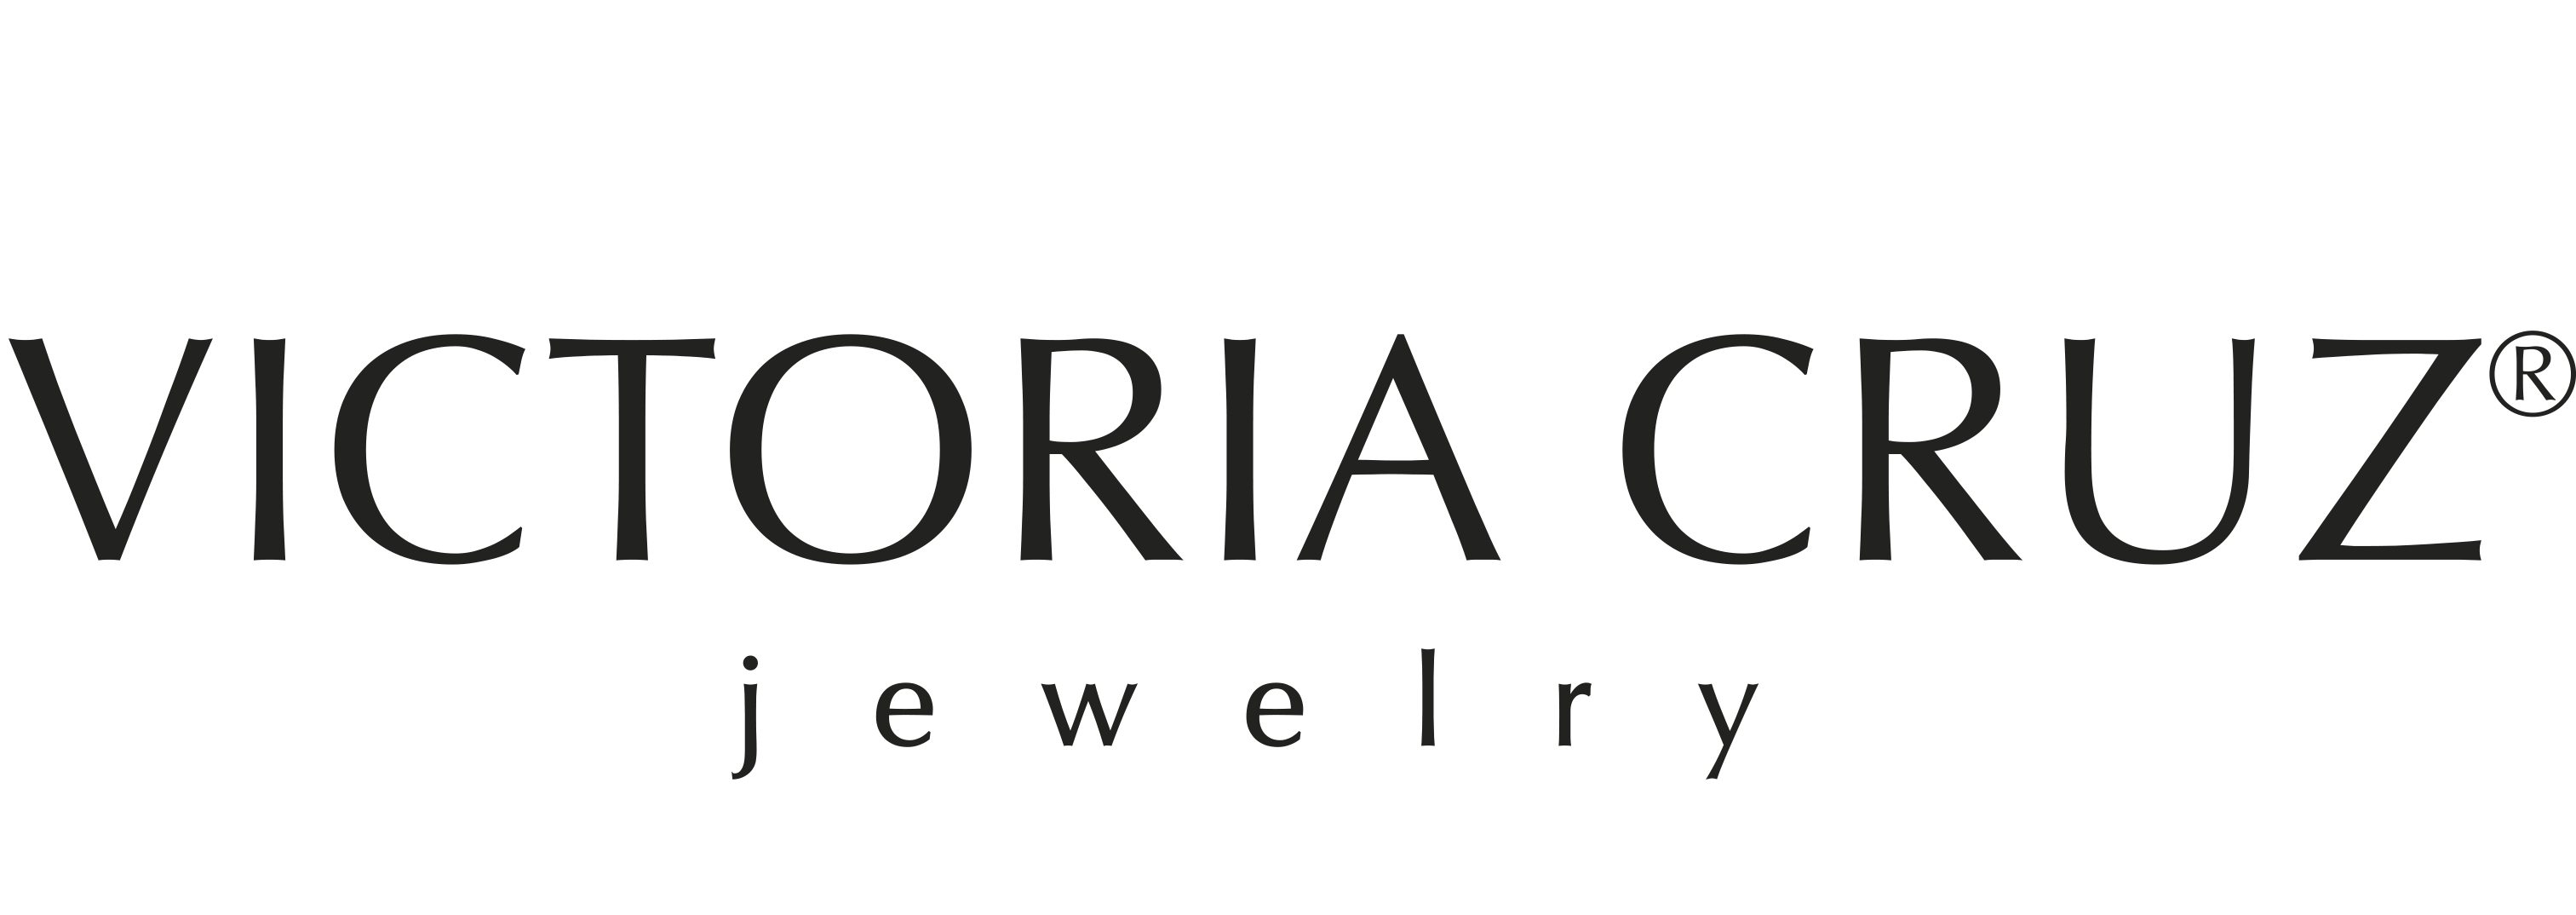 Victoria Cruz logo